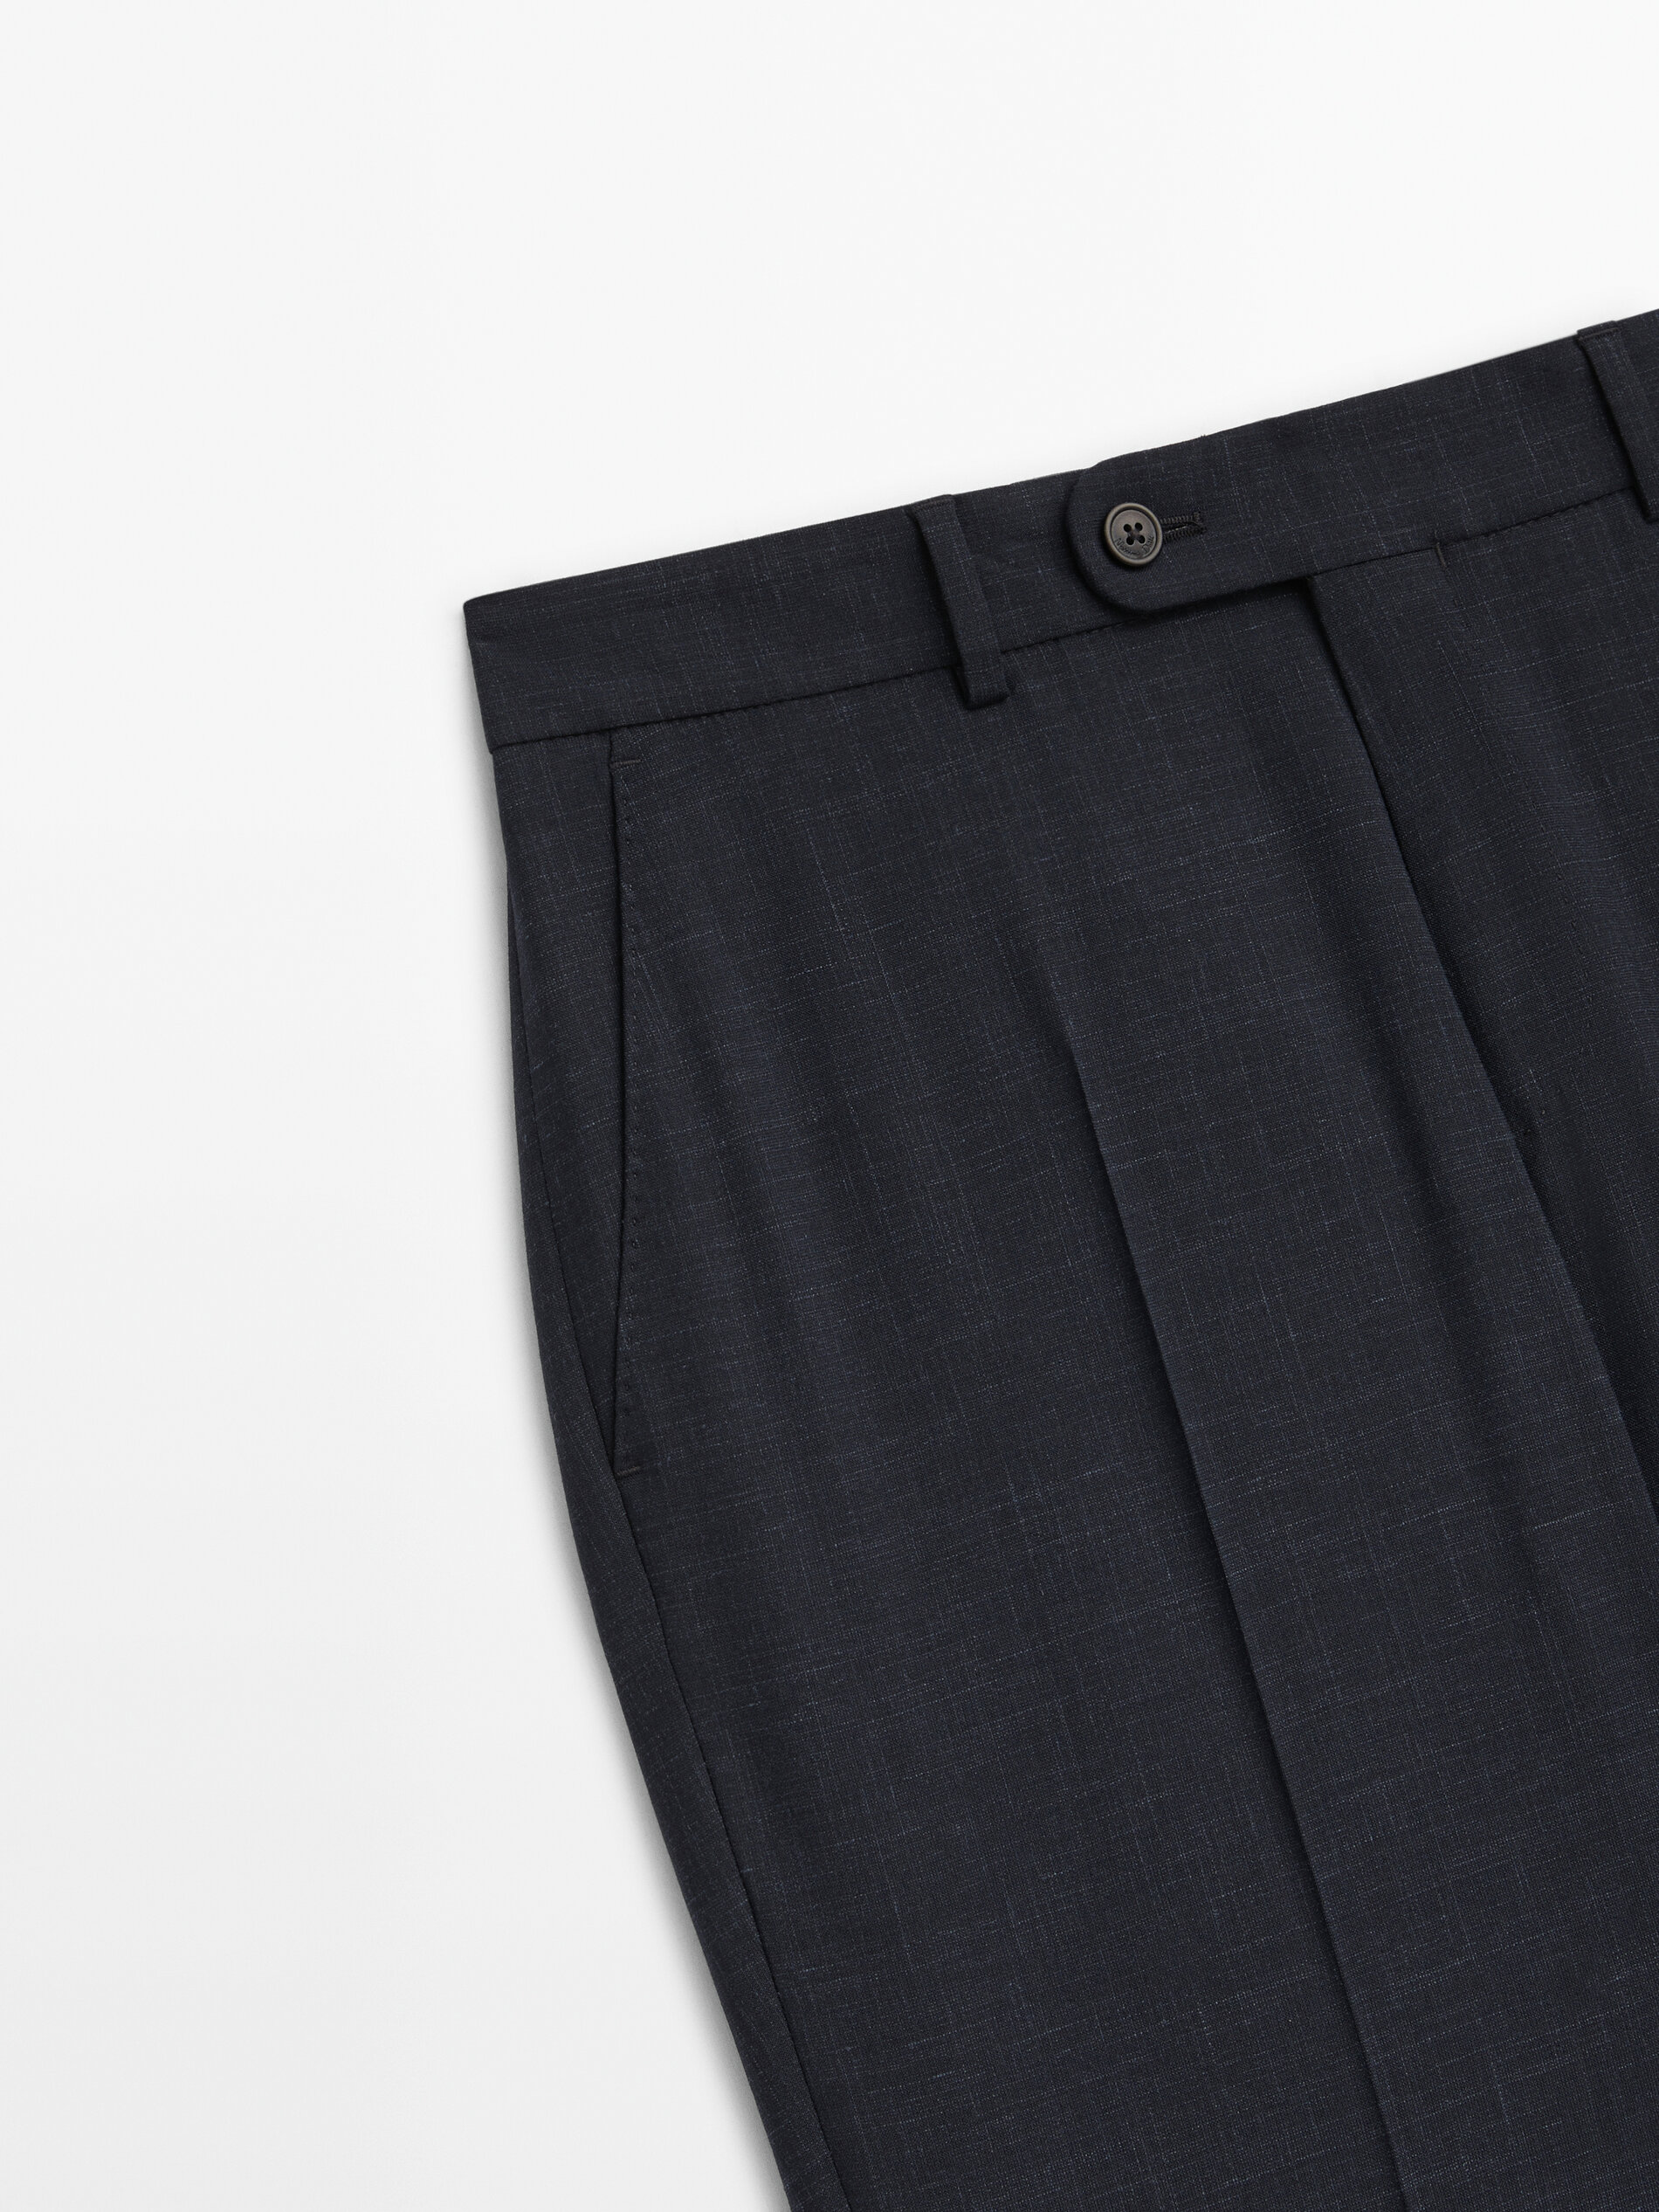 Canali Capri TexturedWeave Slim Fit Dress Pants  Lady Selection Inc